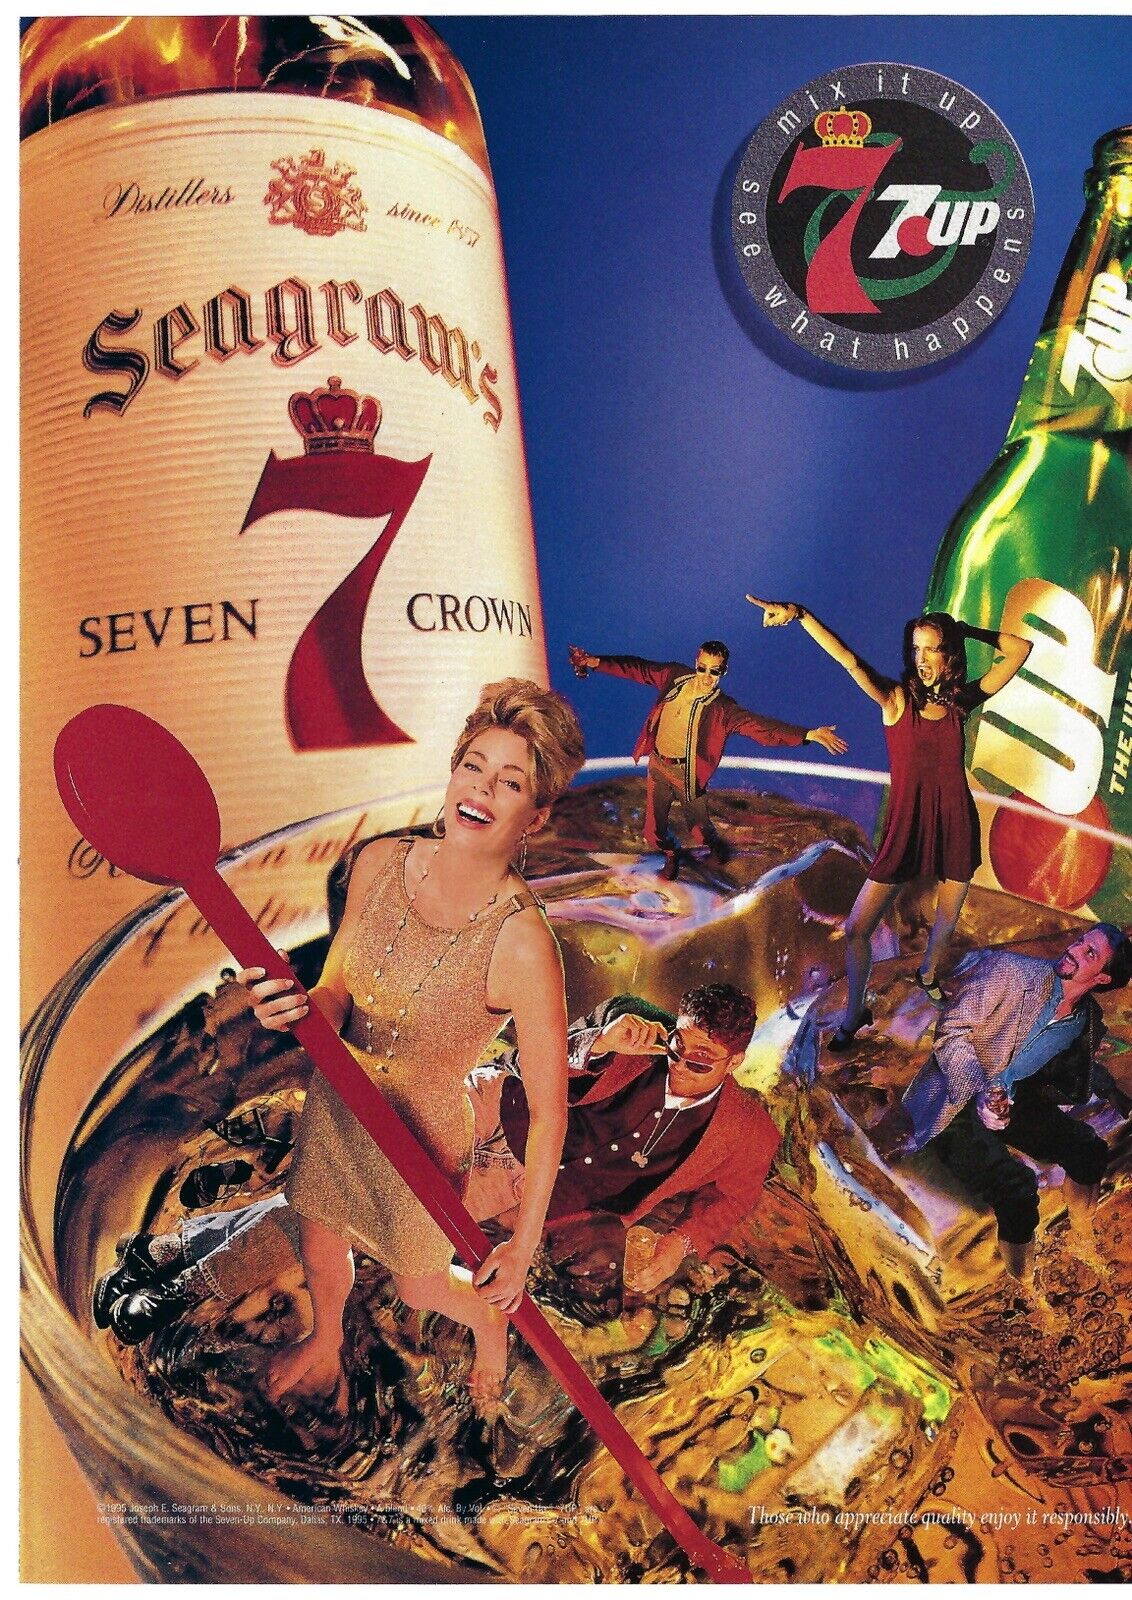 1995 Seagram’s Seven 7 Crown Mix It Up 7 Up Soda Beverage Vtg Print Ad/Poster